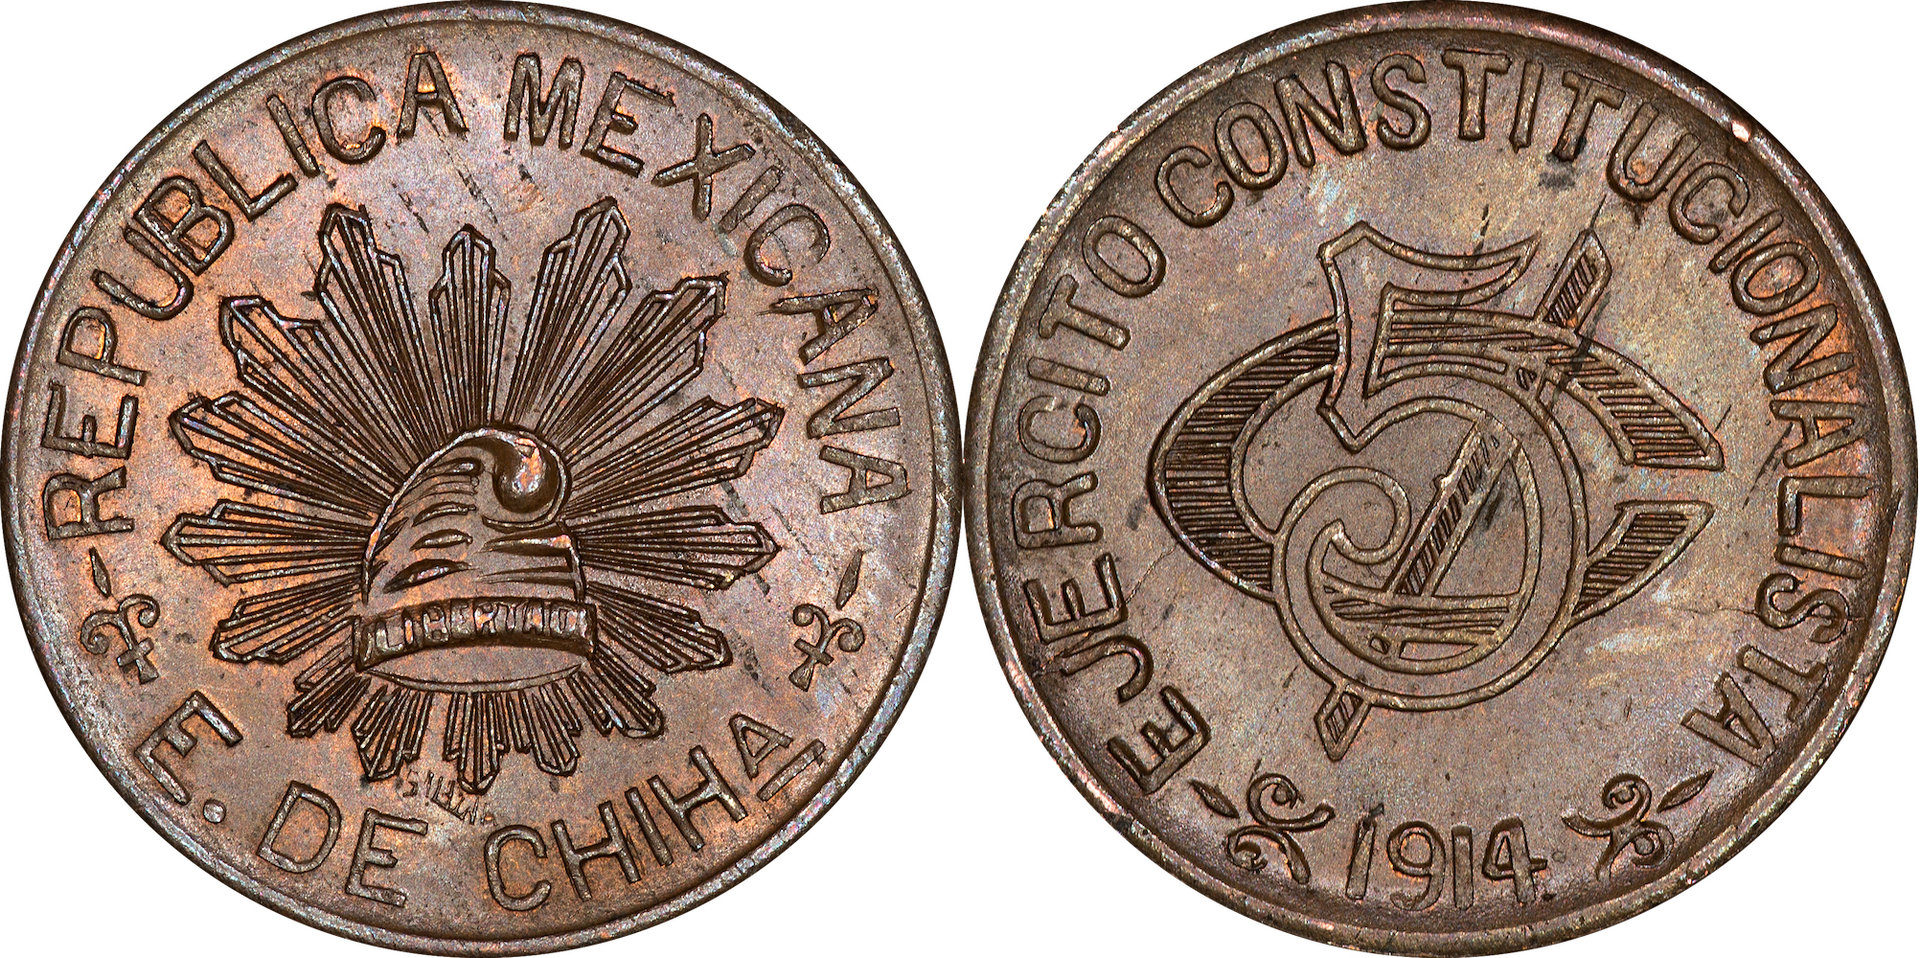 Mexico (Constitutionalist Army) - 1914 5 Centavos.jpg